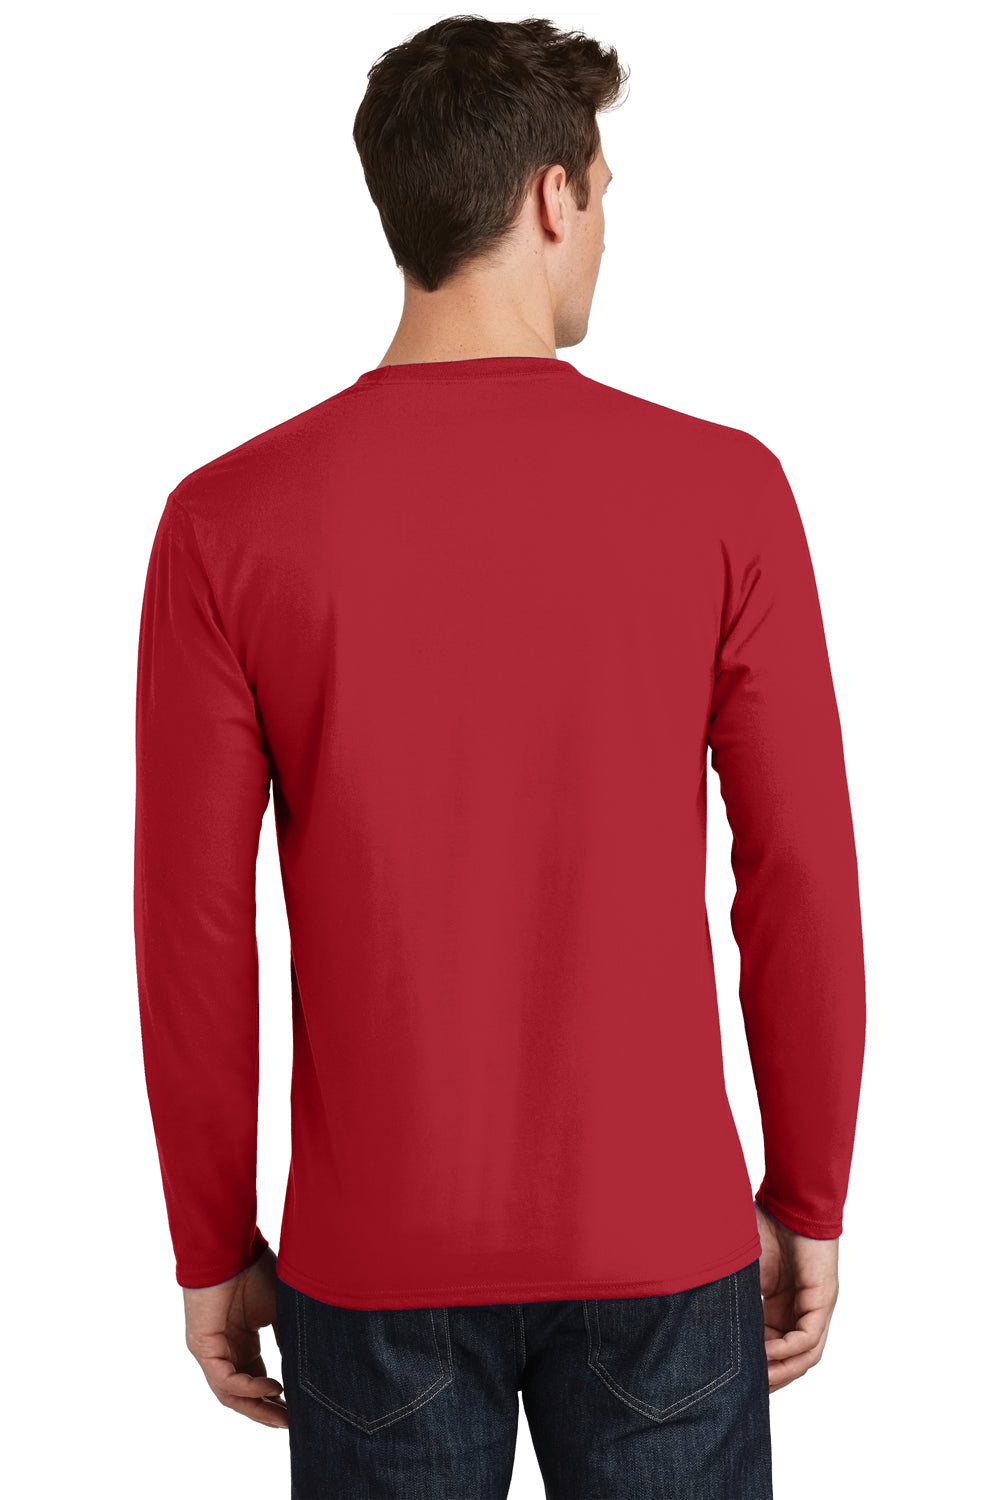 Port & Company PC450LS Mens Fan Favorite Long Sleeve Crewneck T-Shirt Cardinal Red Back